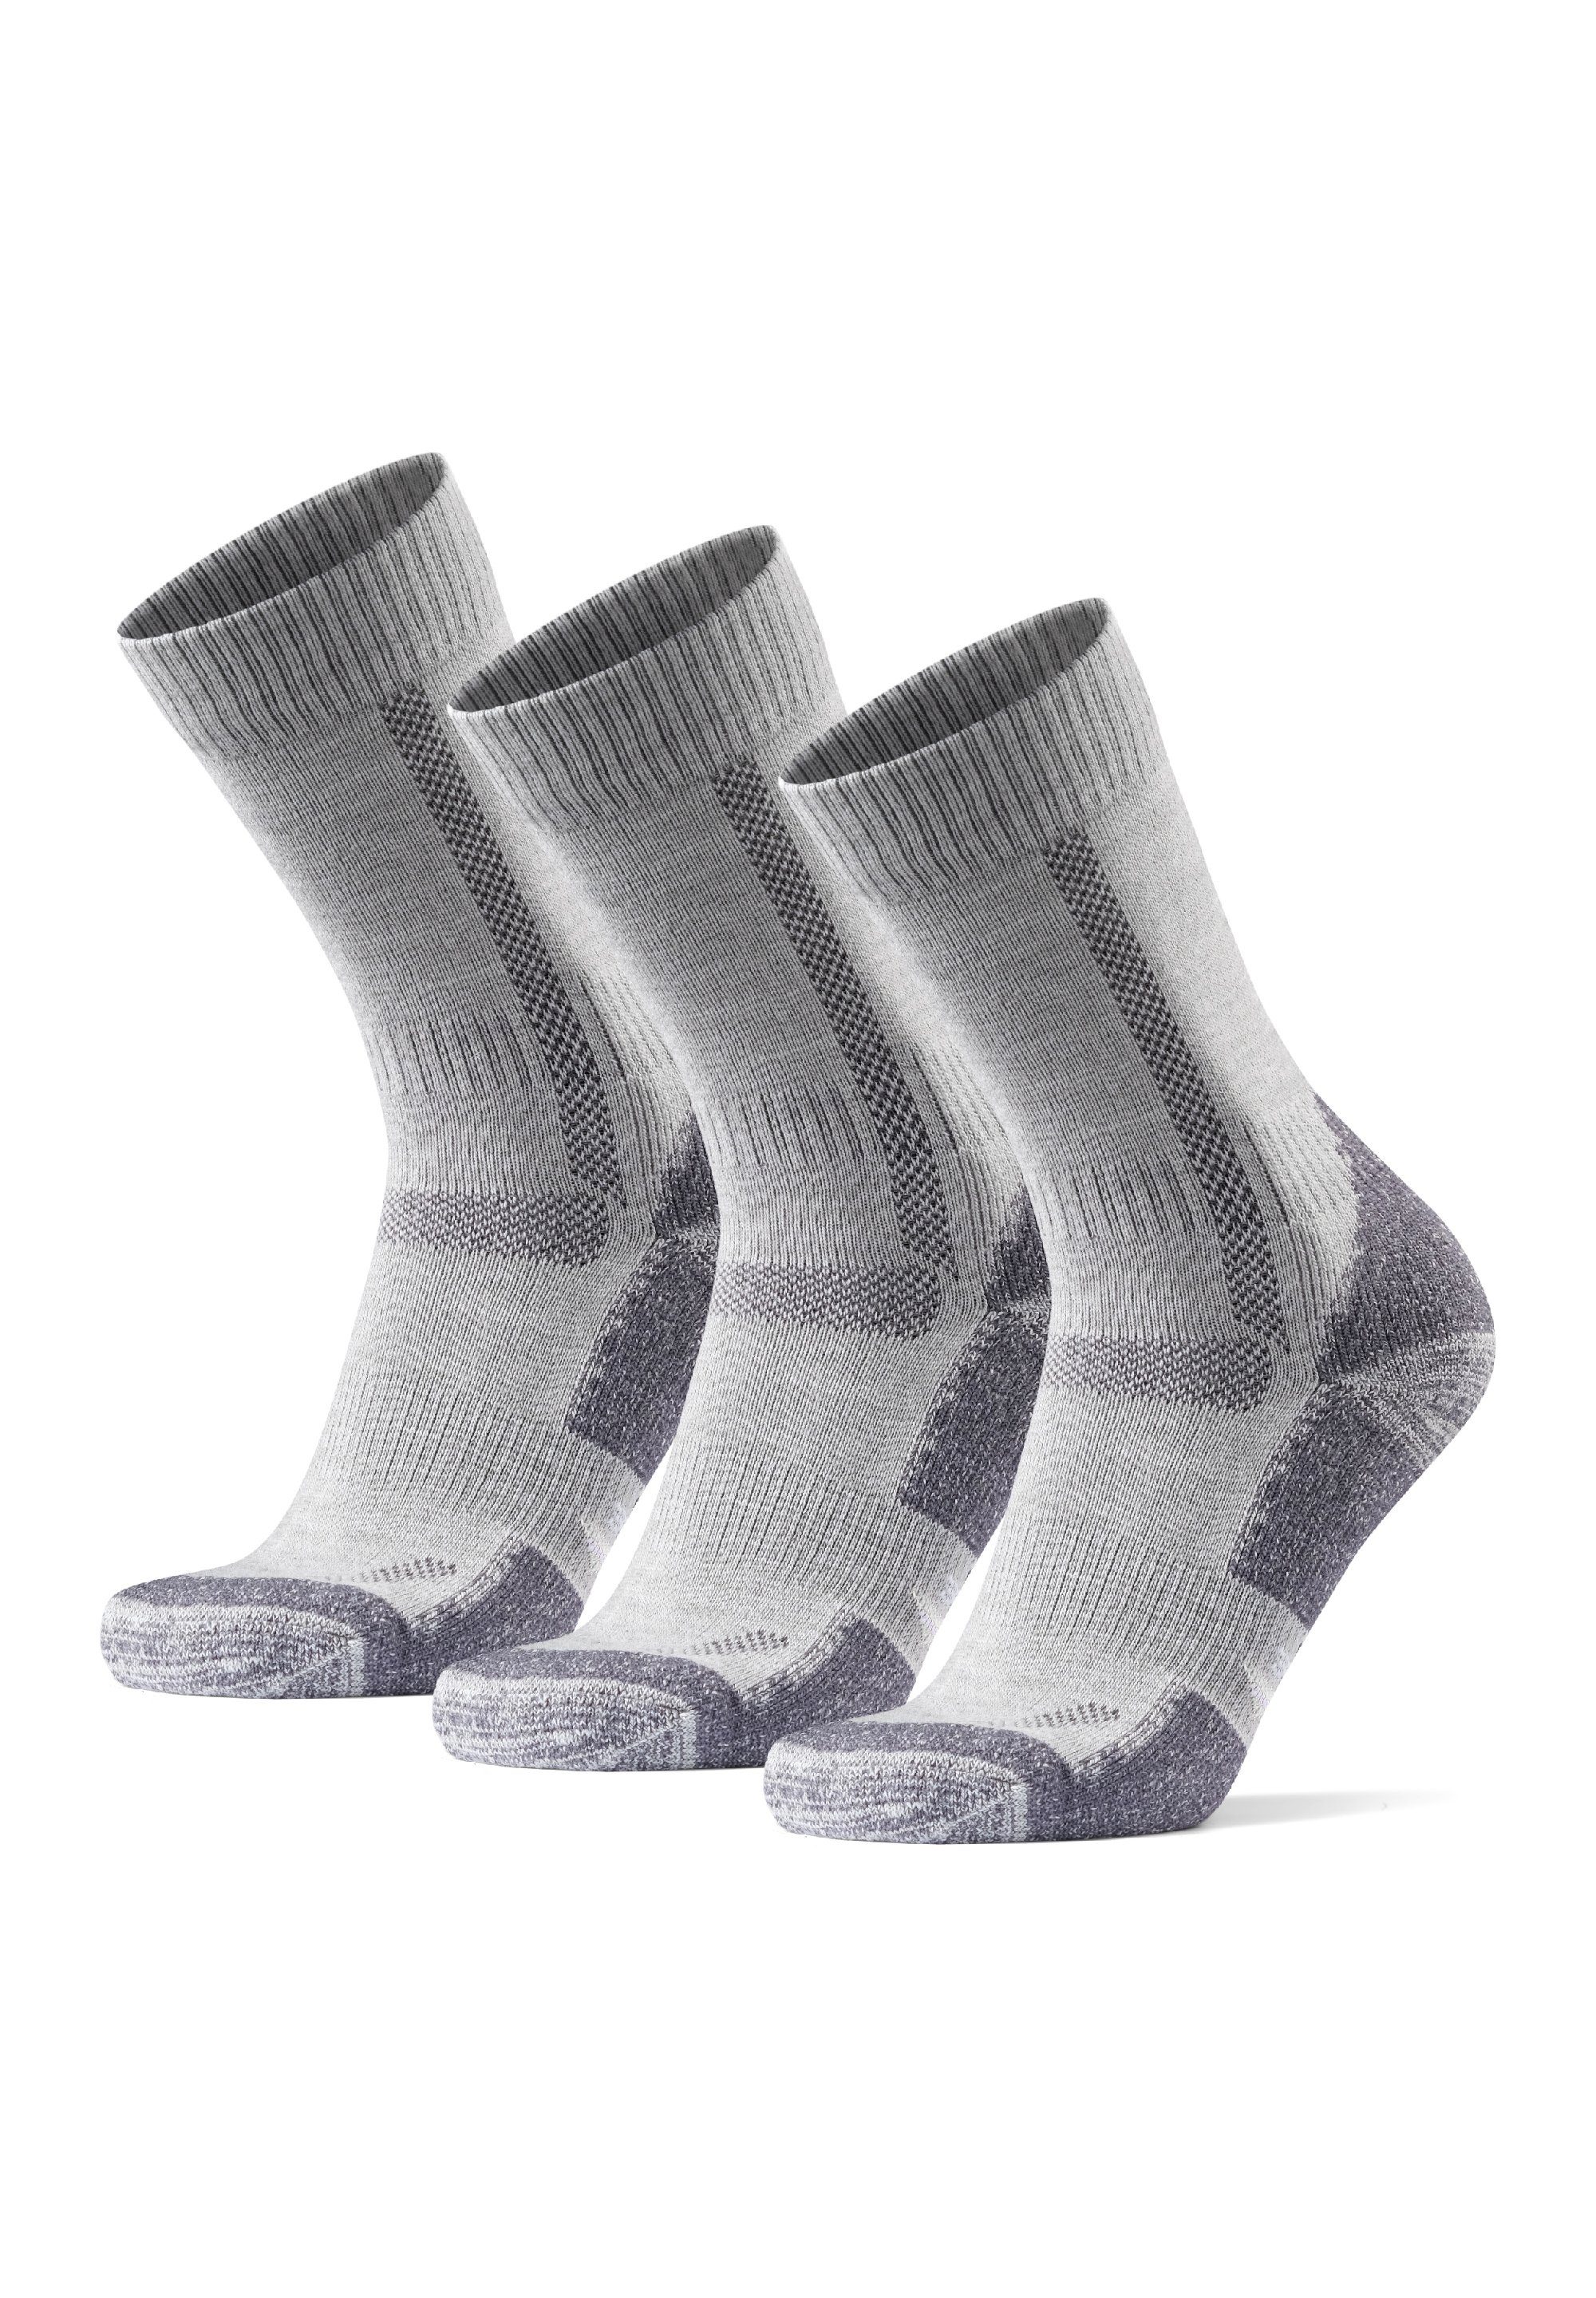 DANISH ENDURANCE Wandersocken Merino Hiking Classic Socks (Packung, 3-Paar) Anti-Blasen, für Herren, Damen & Kinder hellgrau